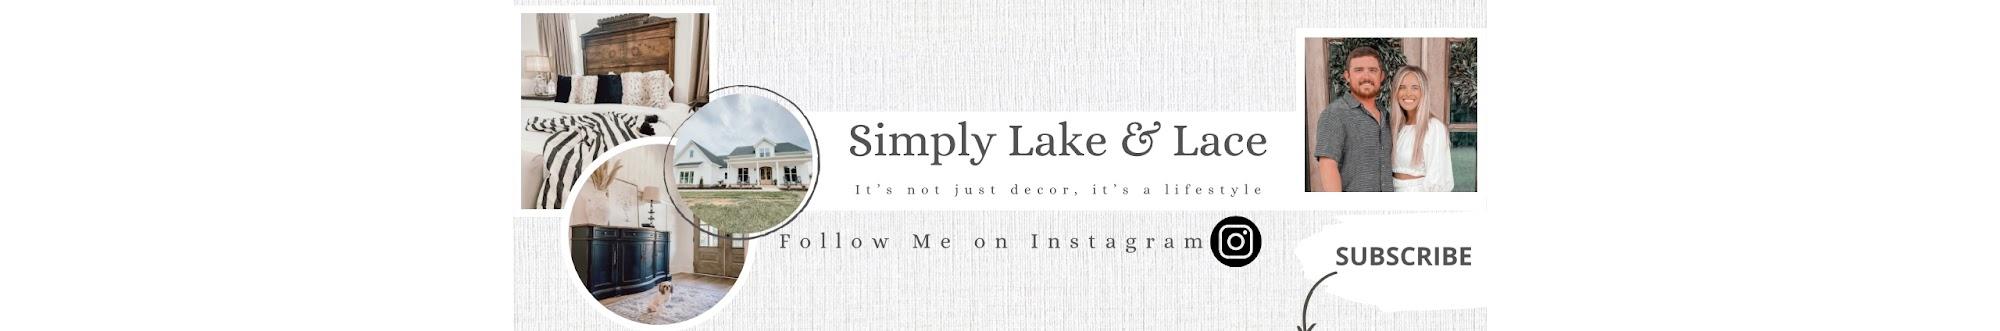 Simply Lake & Lace